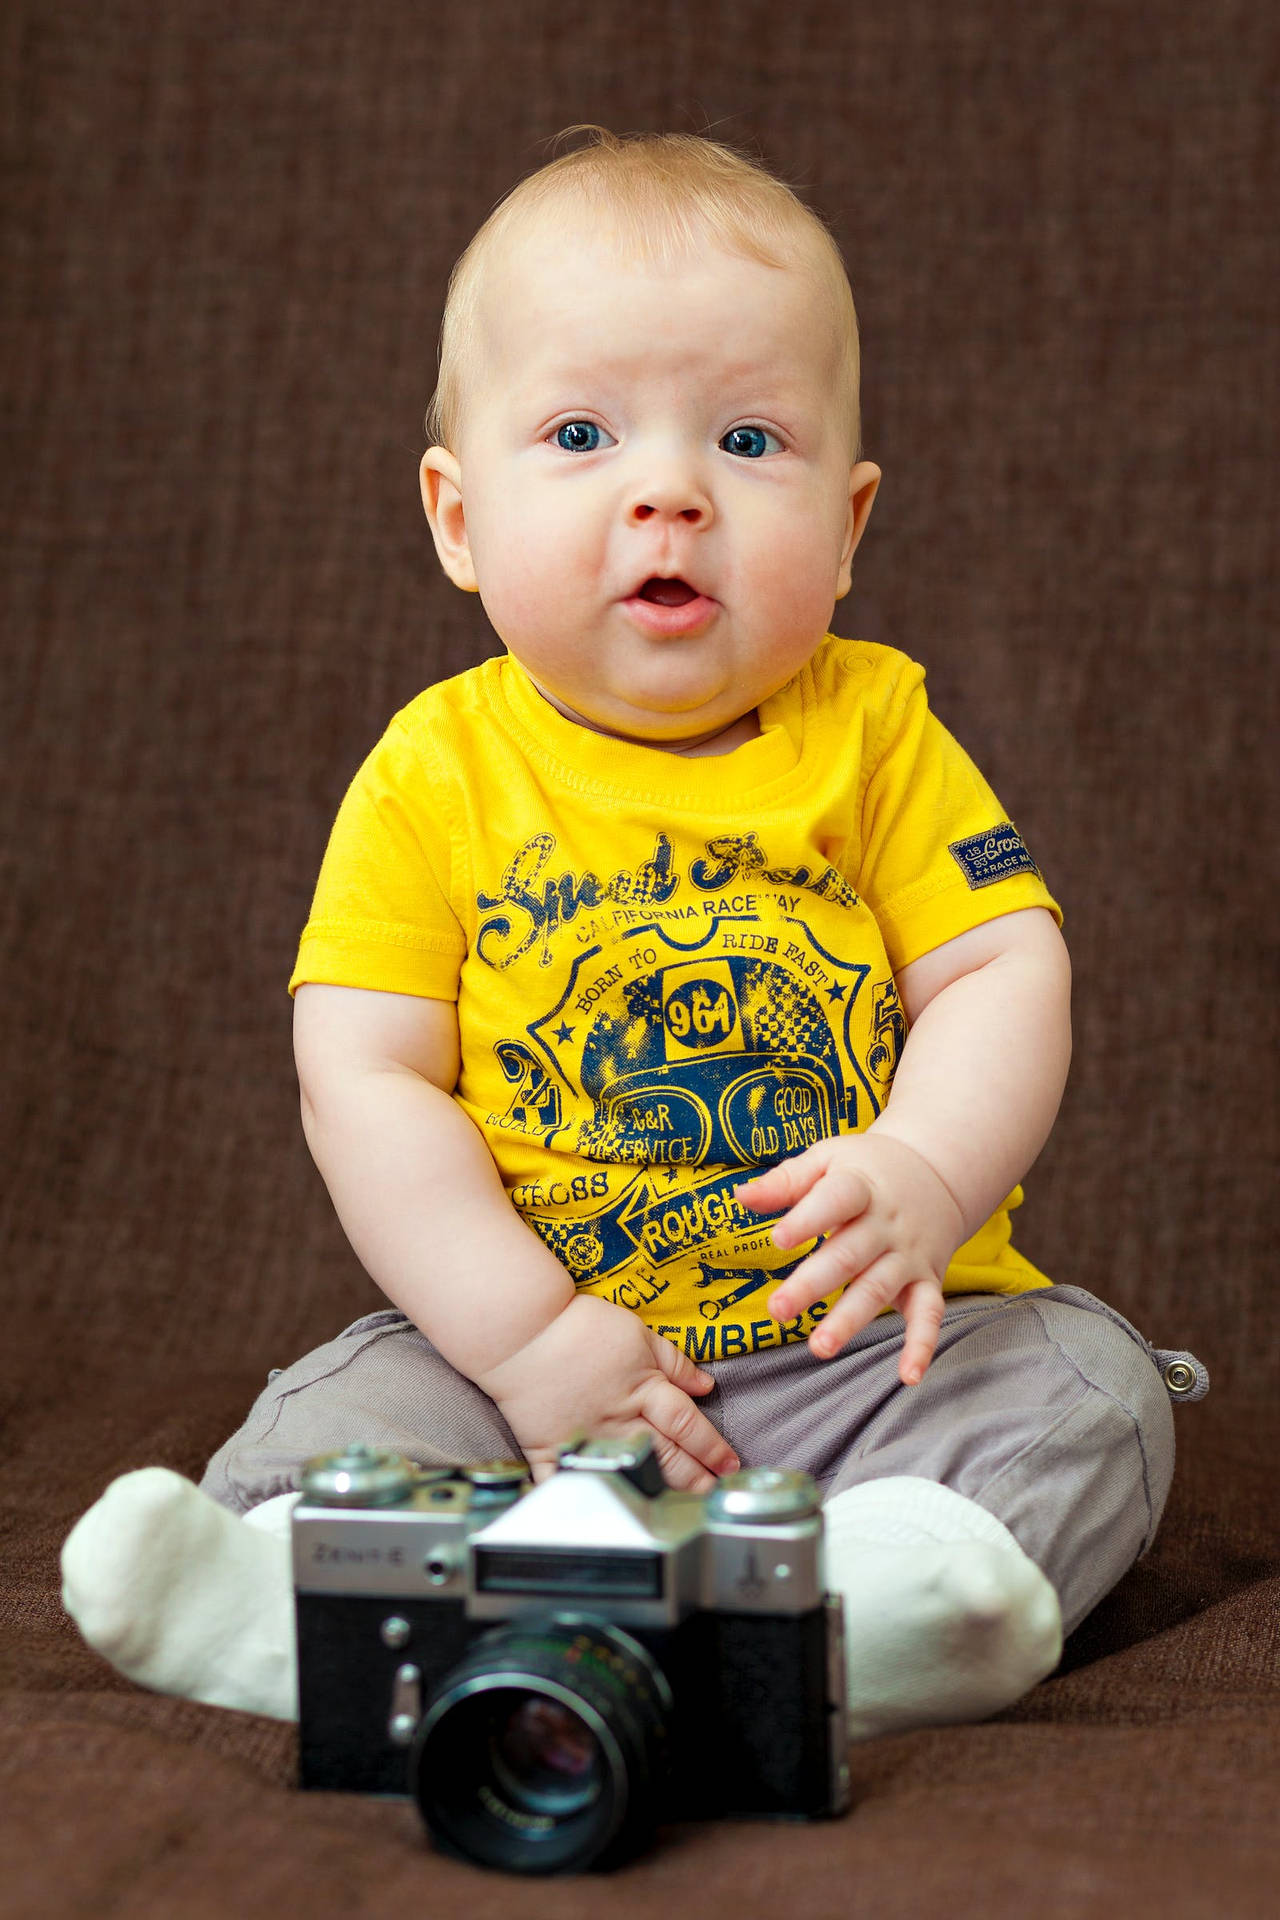 Baby Boy Wearing Yellow Shirt Wallpaper